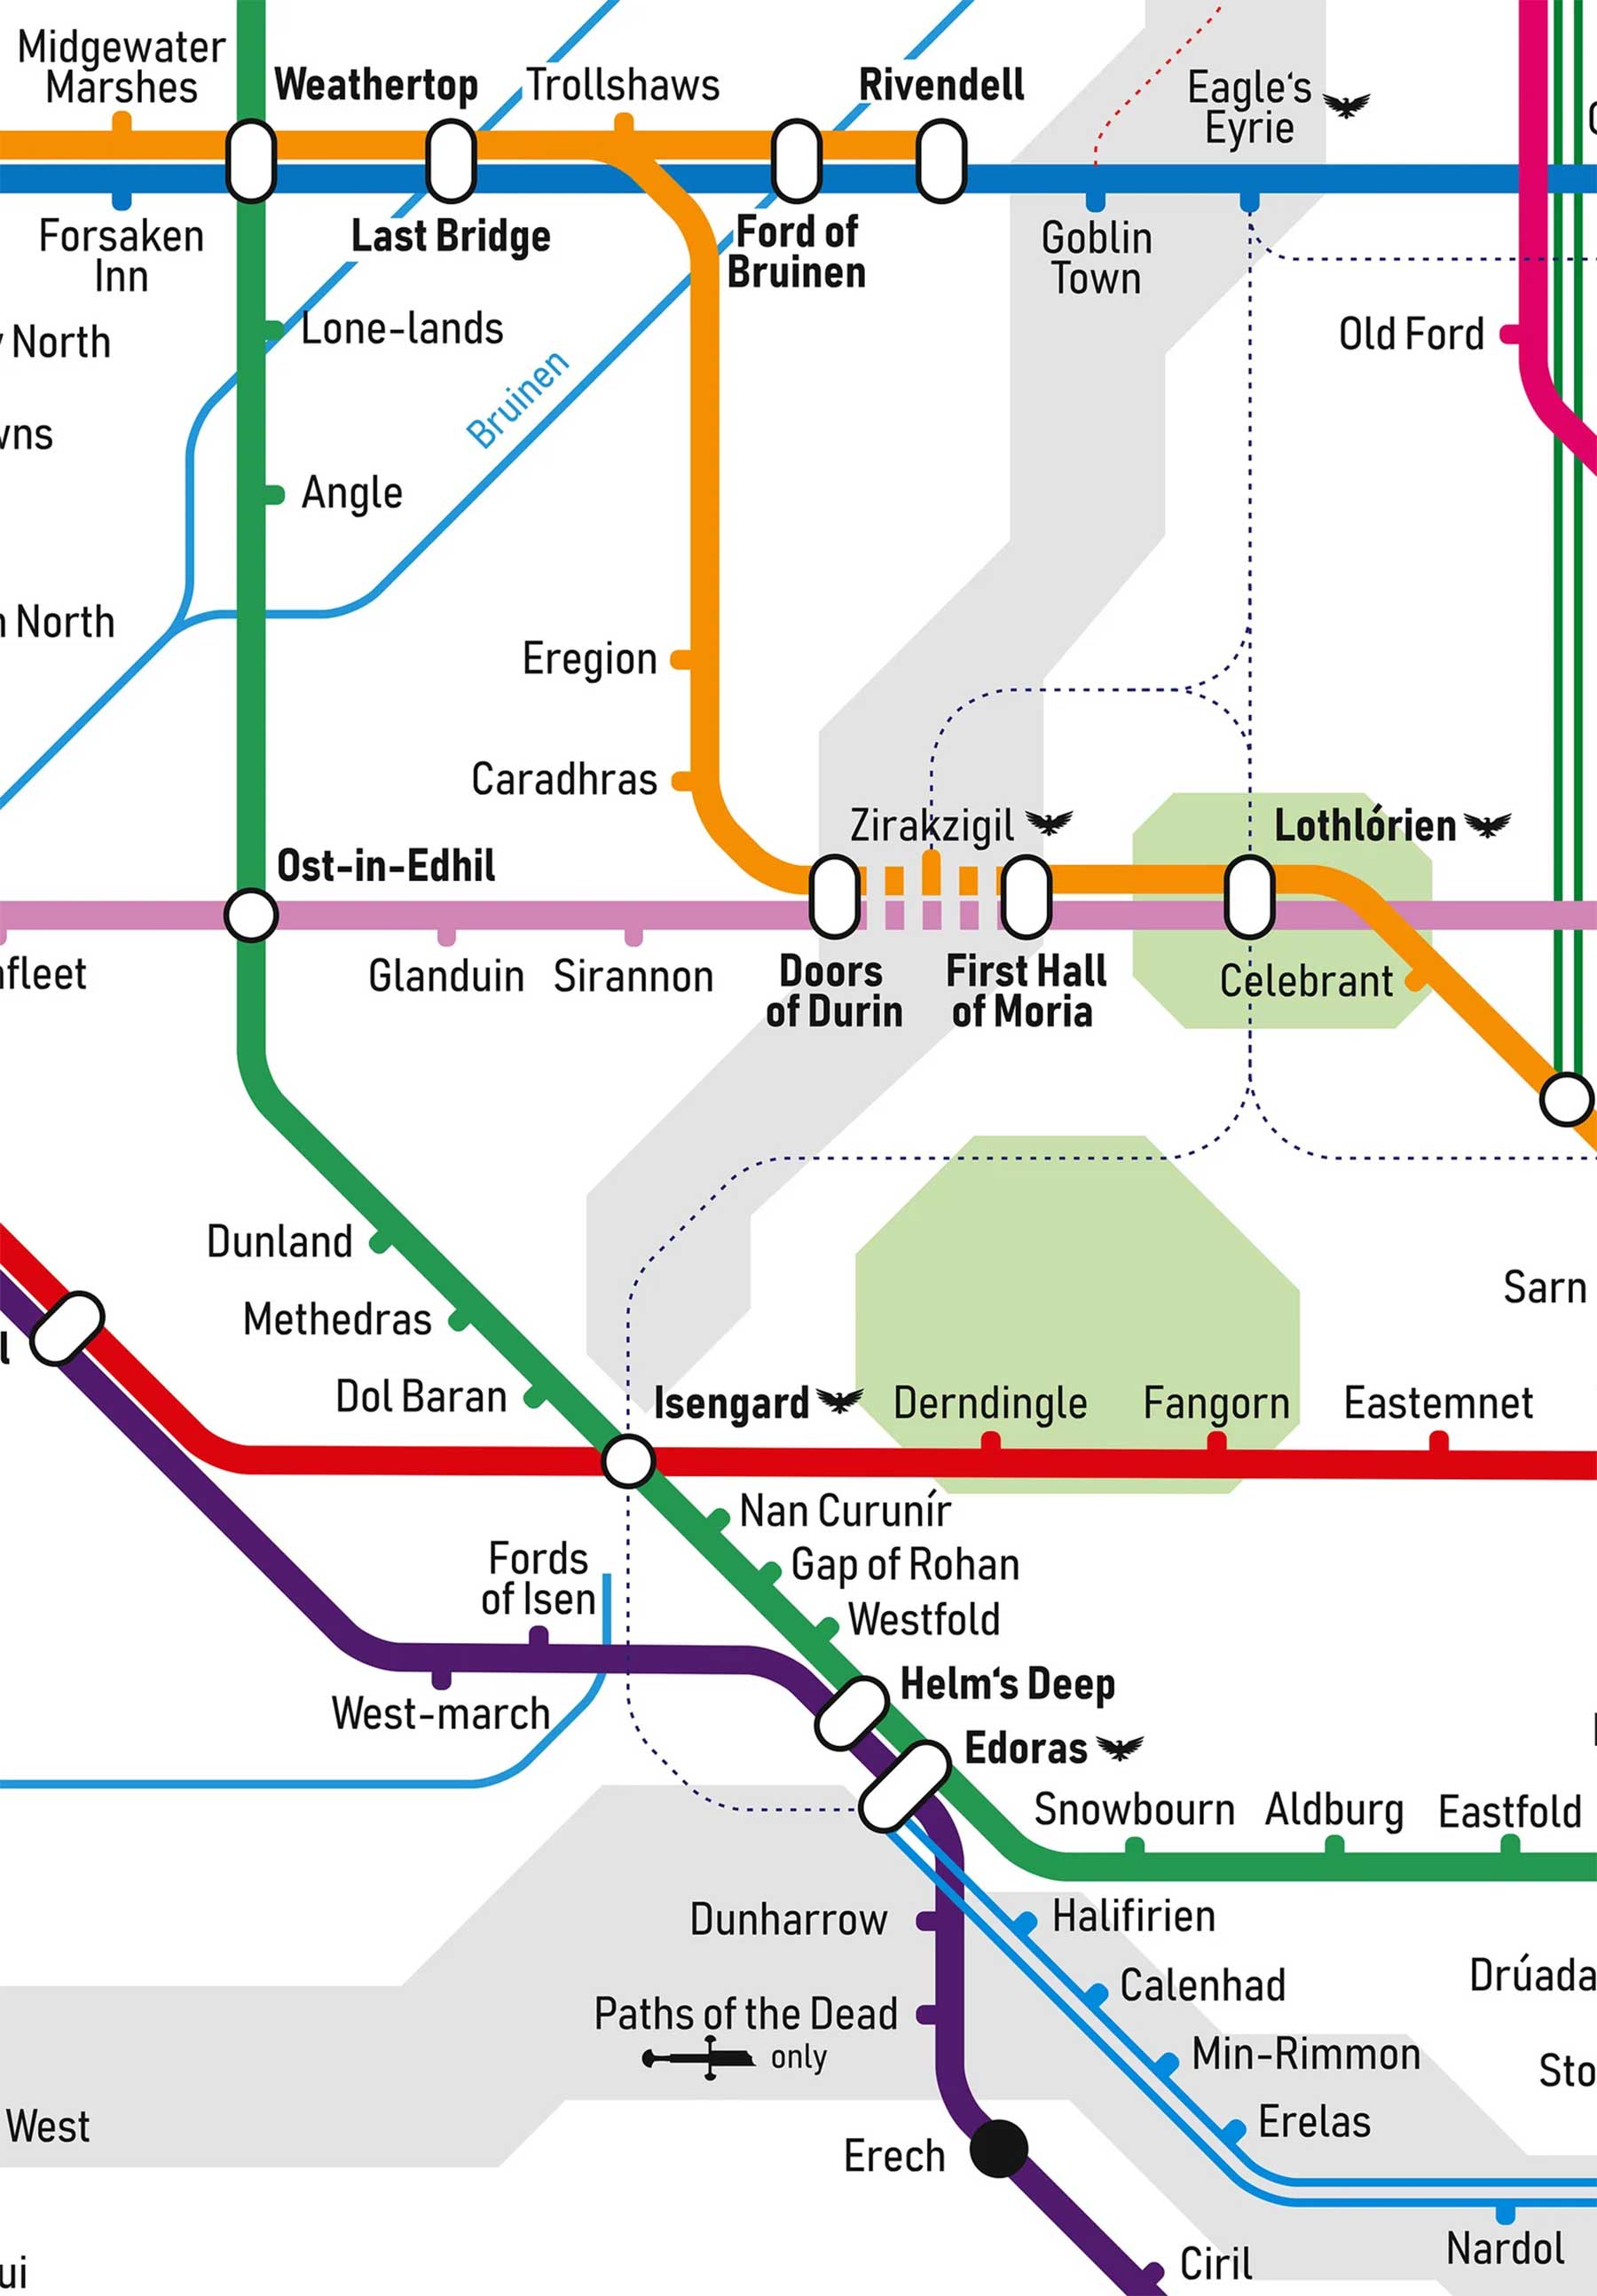 "Herr der Ringe": Mittelerde als U-Bahn-Karte Herr-der-Ringe-U-bahn-karte-02 